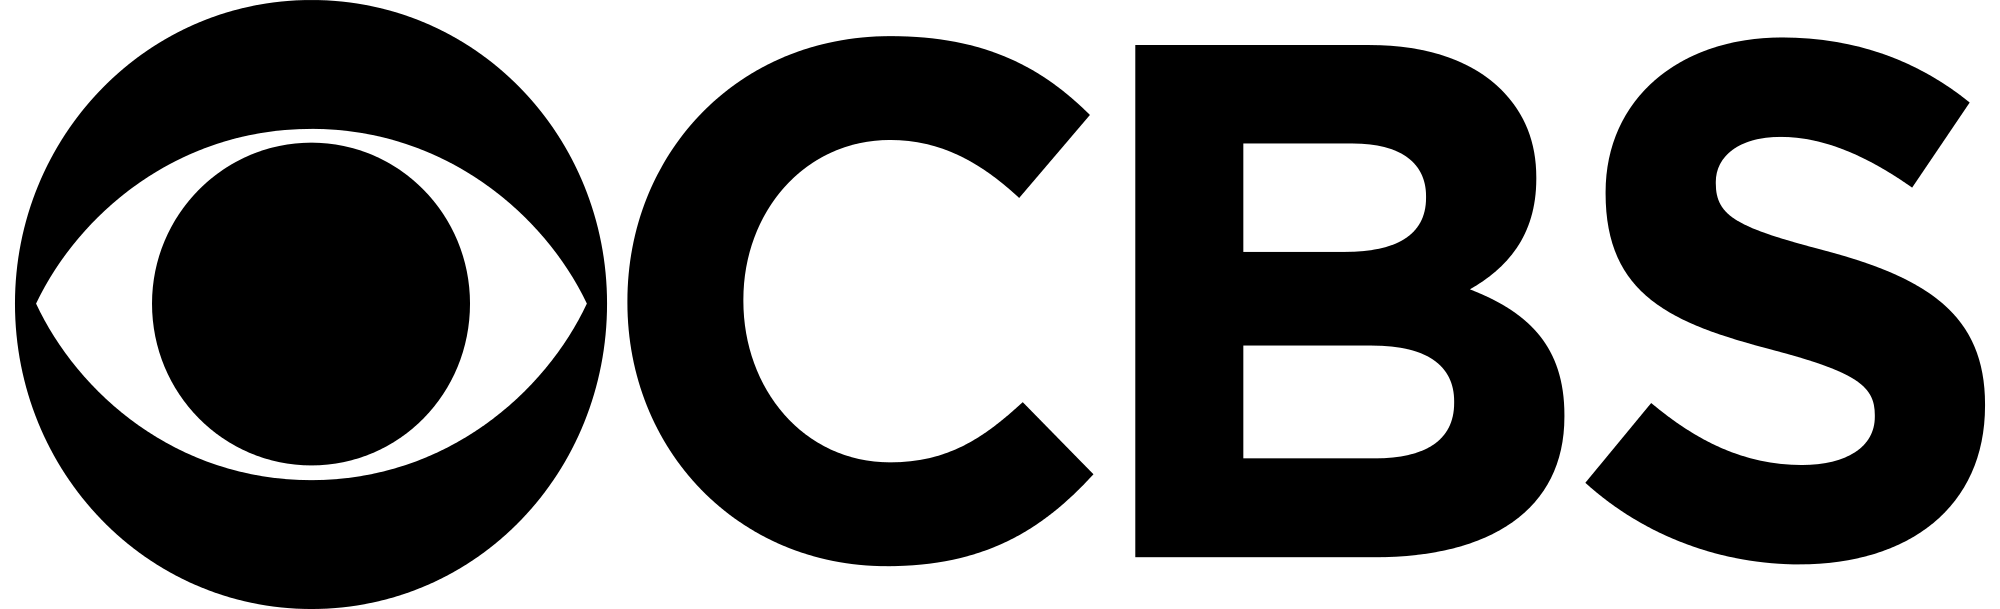 CBS Brand Logo